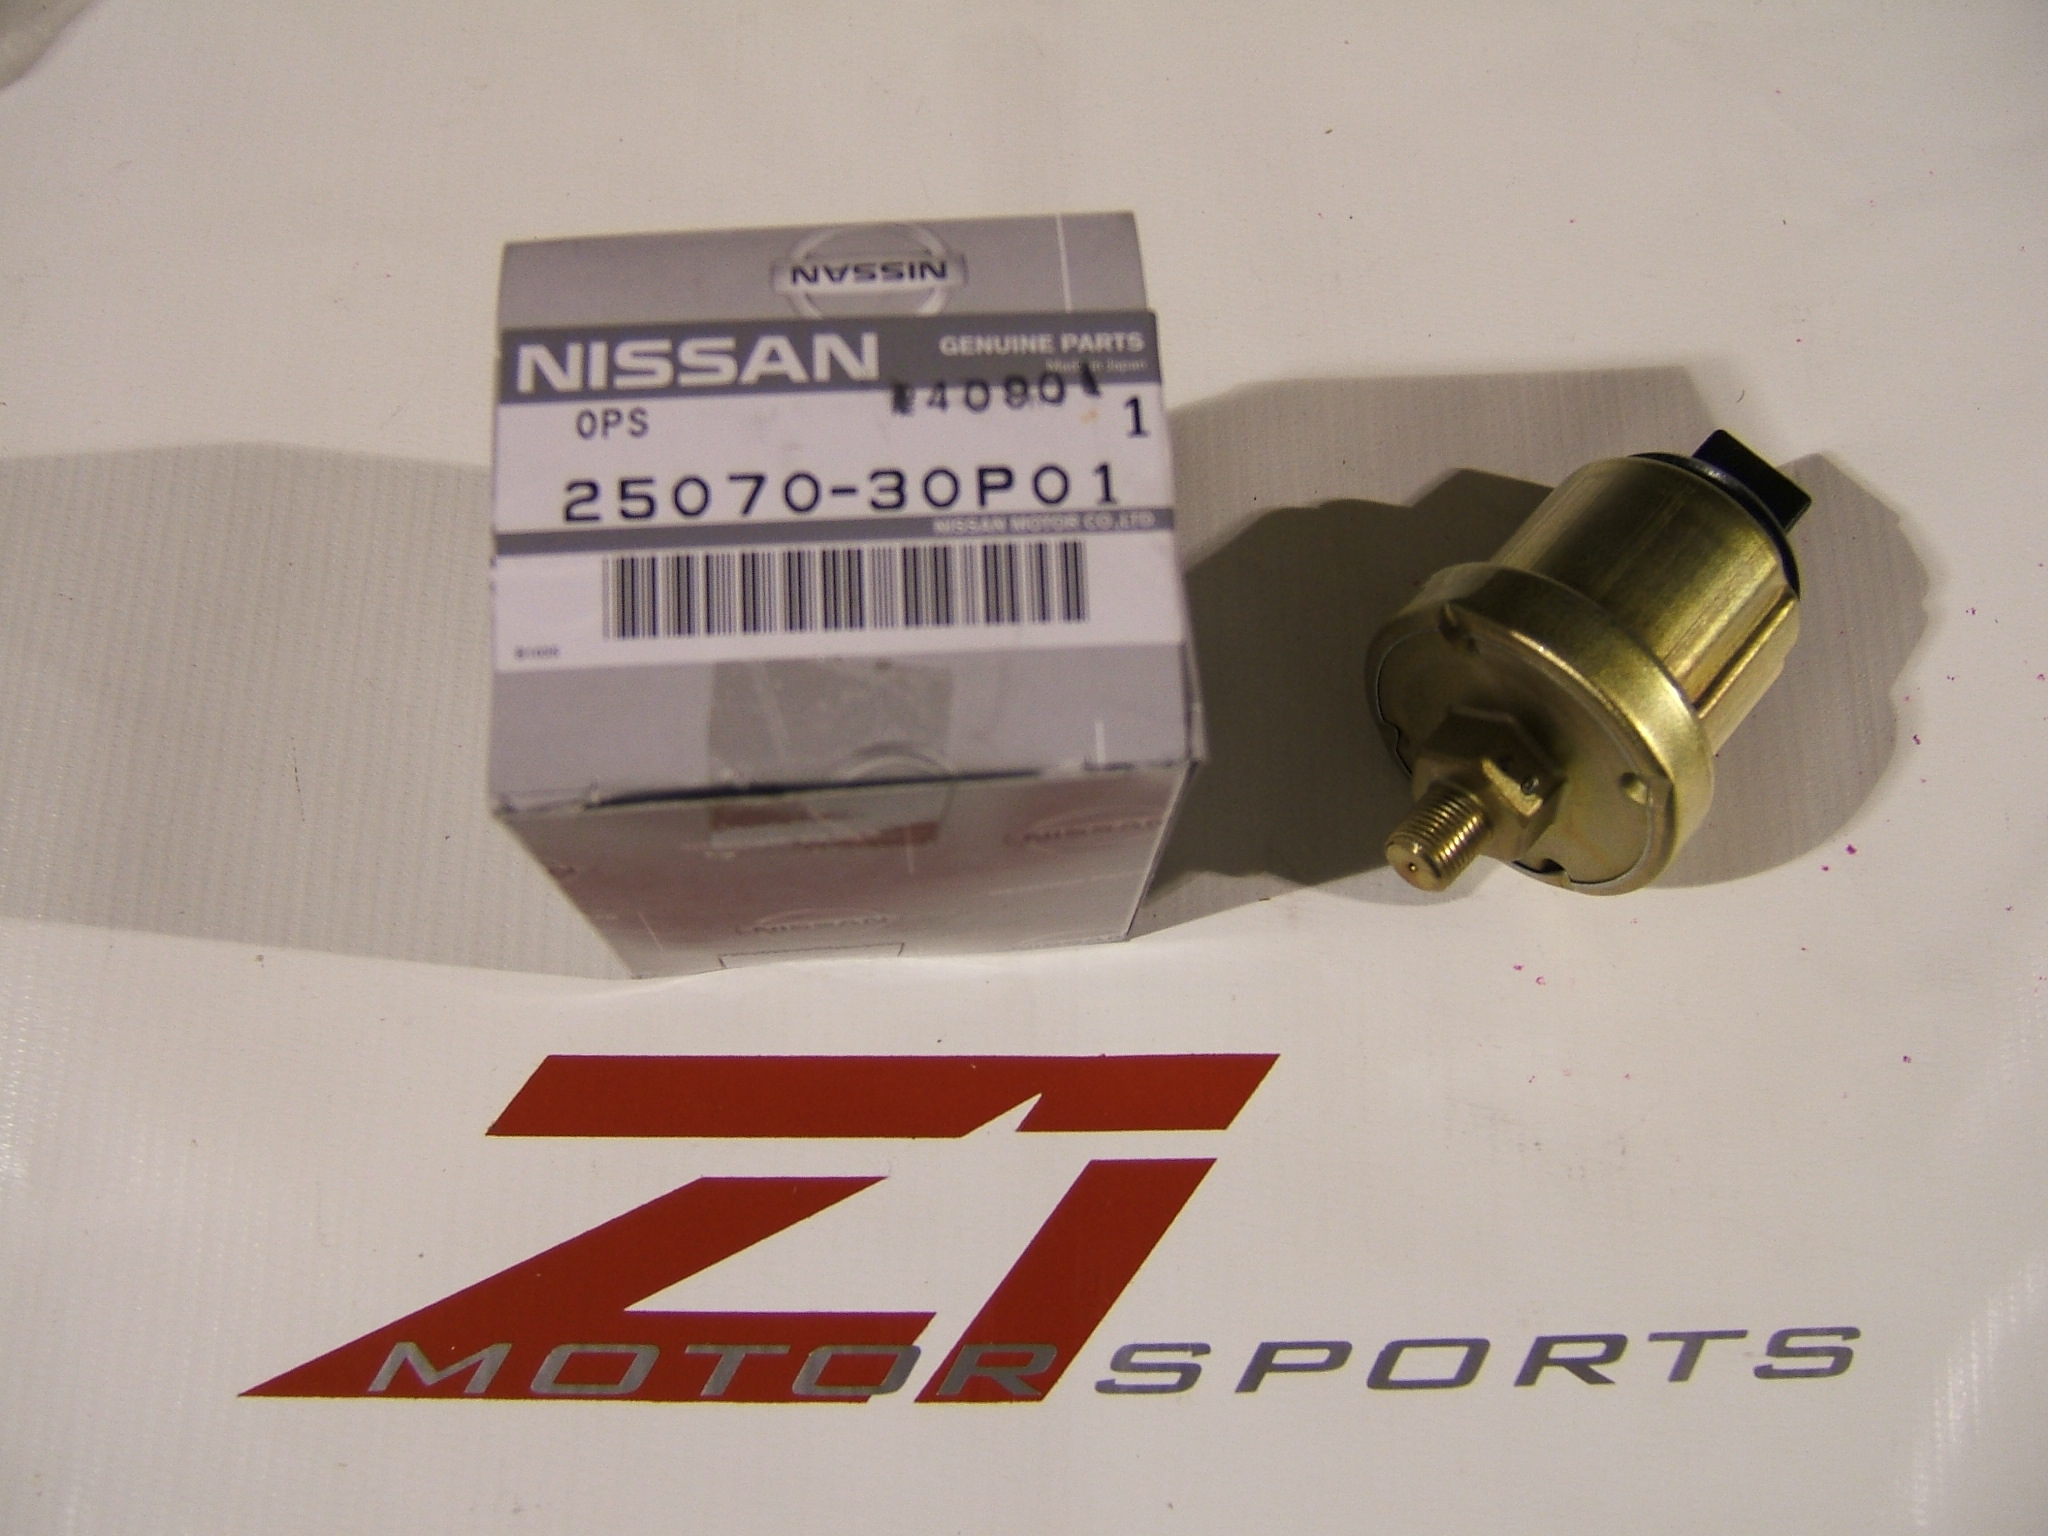 Nissan oil pressure sending unit #4